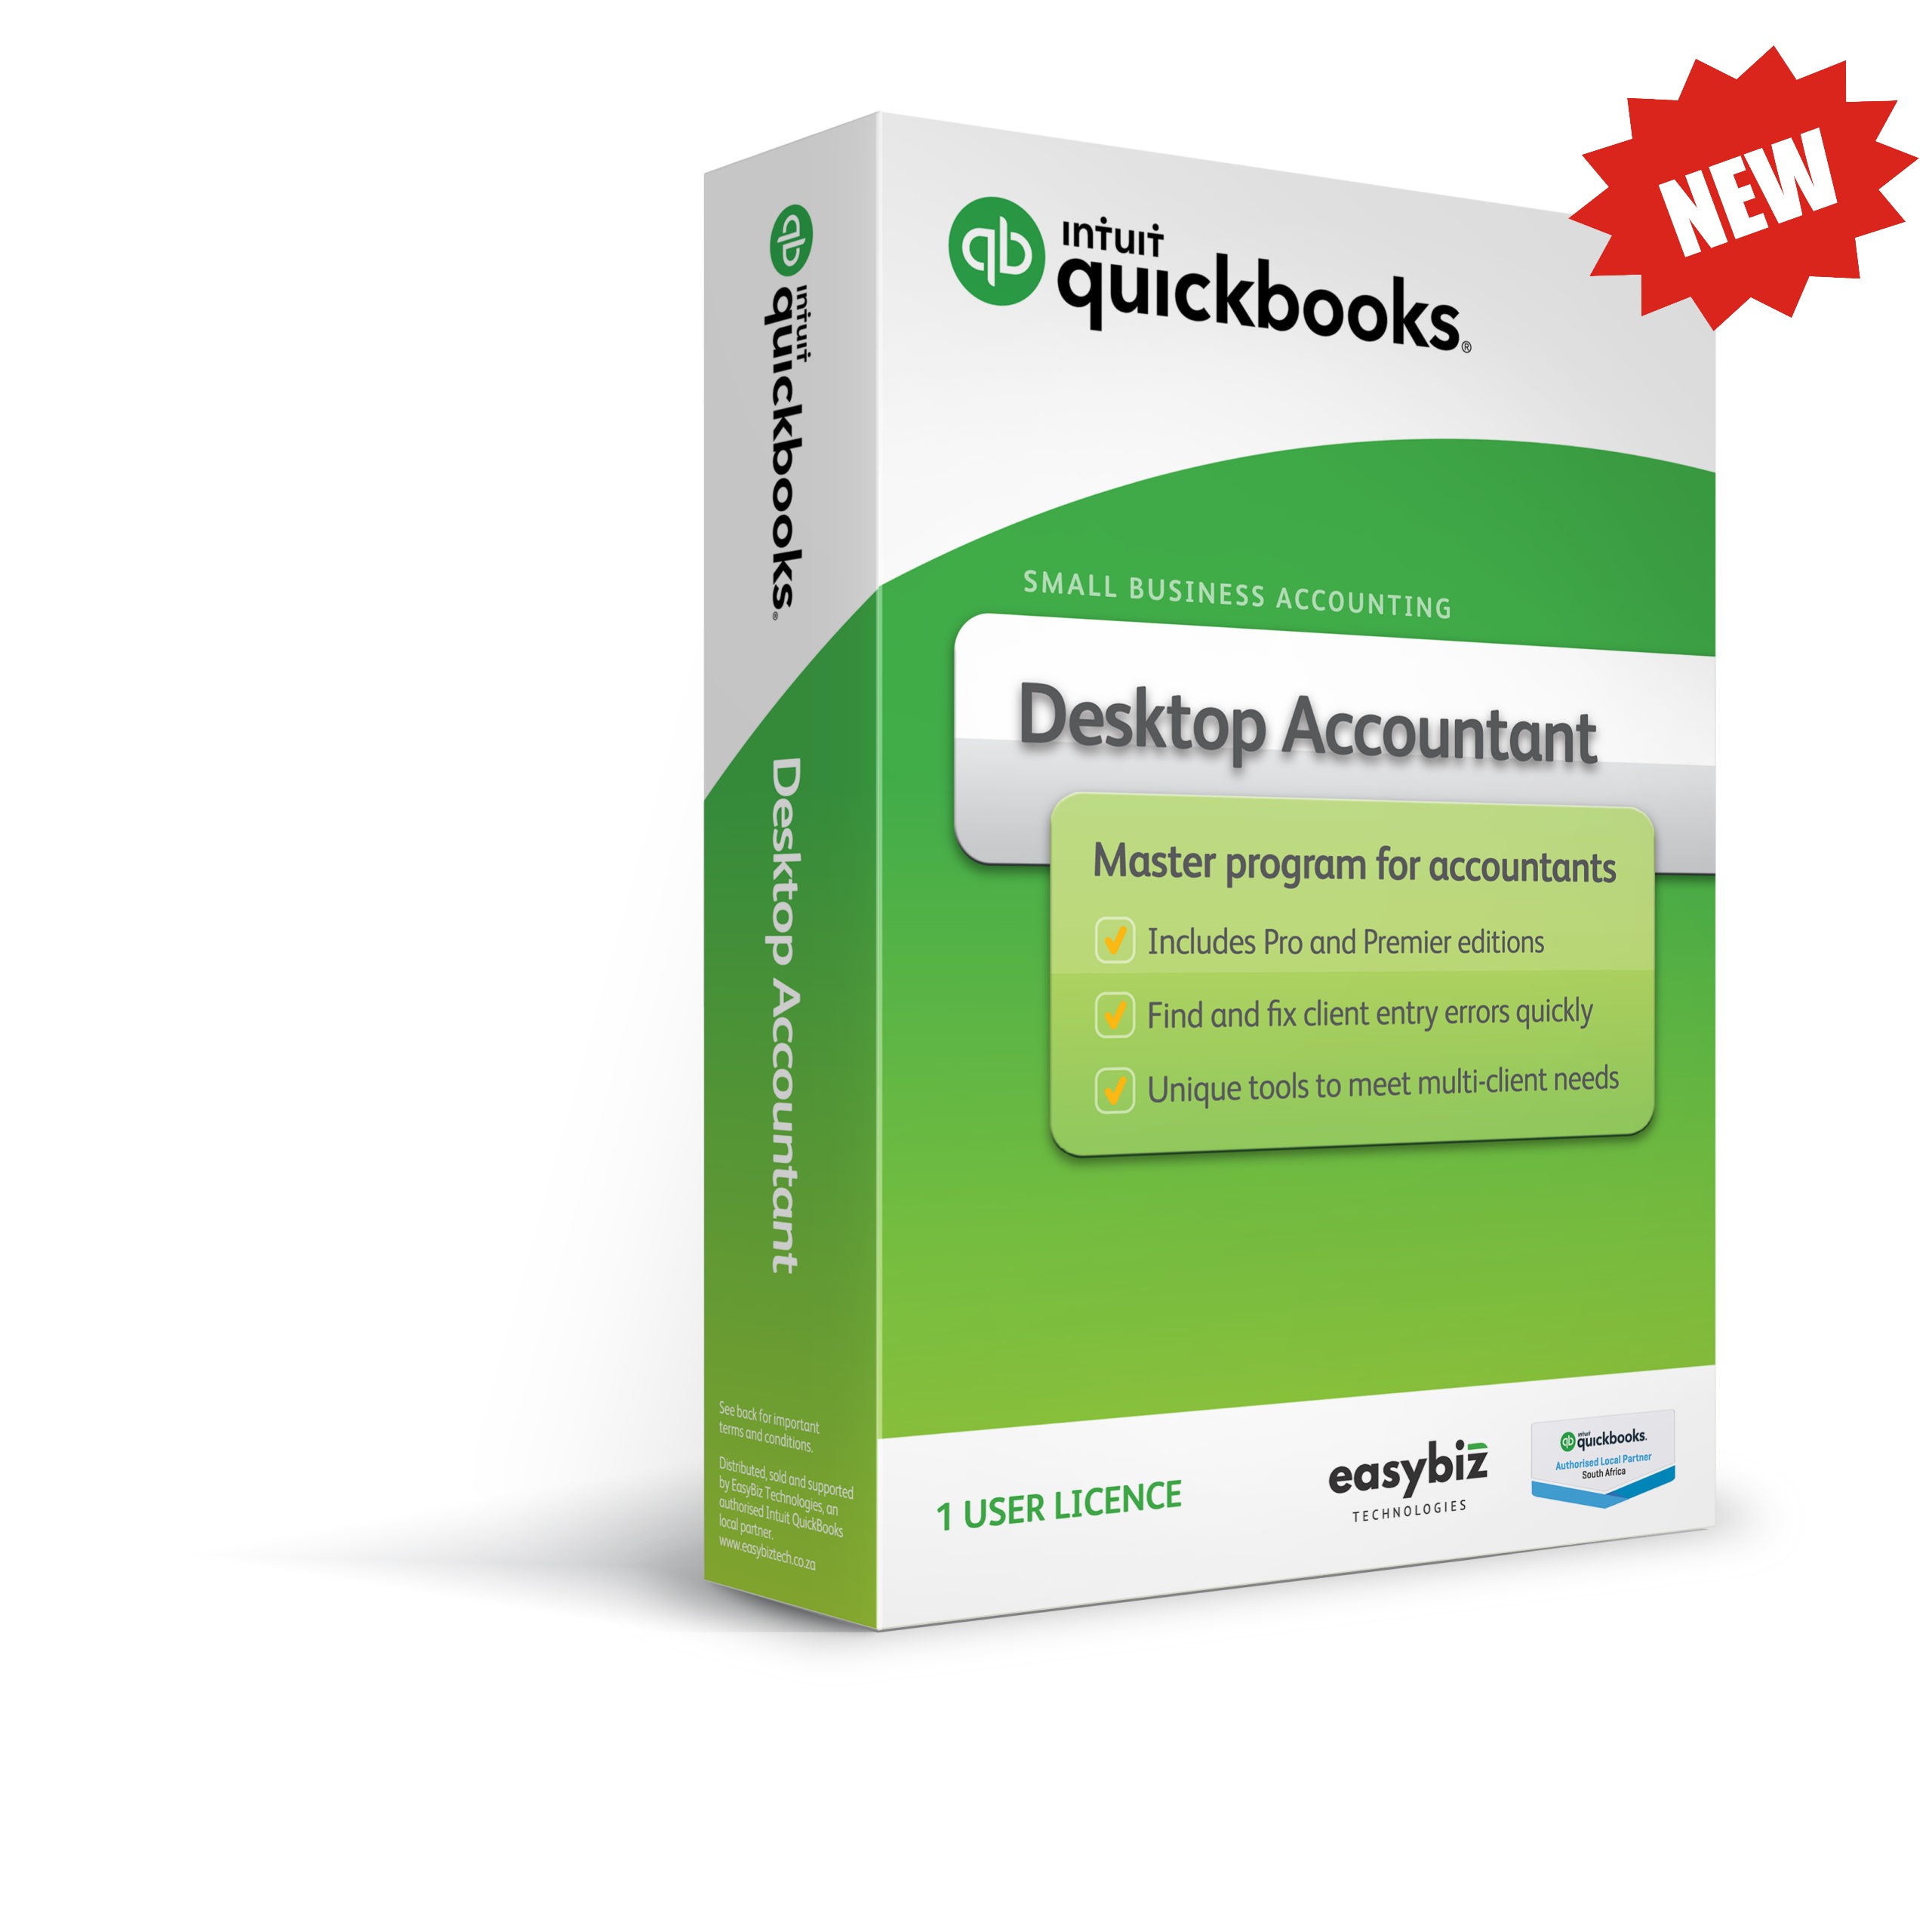 quickbooks accountant desktop 2020 release date